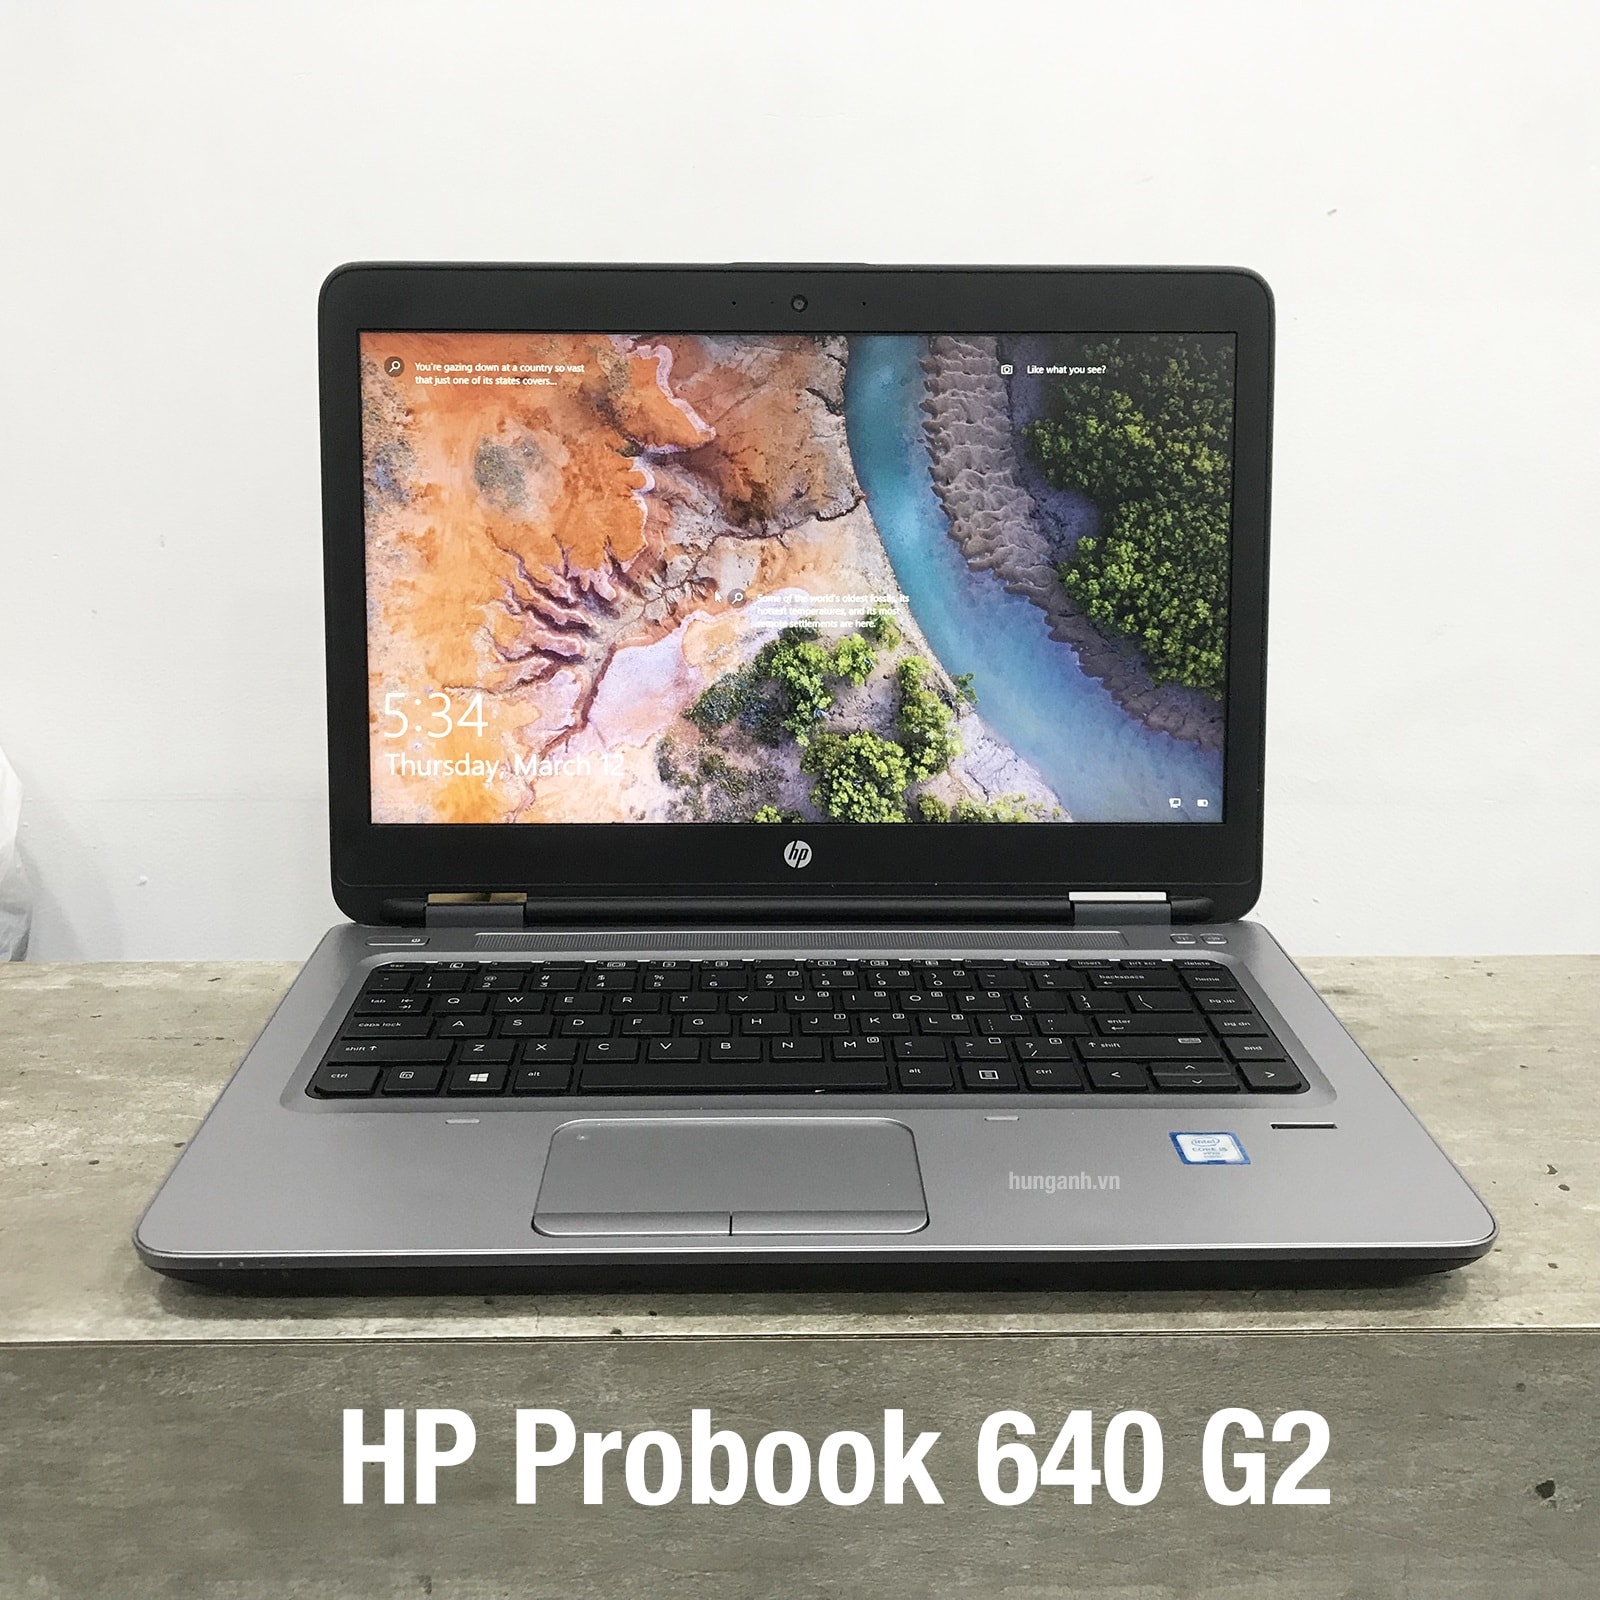 HP Probook 640 G2 Core i7 6600U, Ram 4Gb, SSD 120Gb, 14 inch, HD Graphics 520